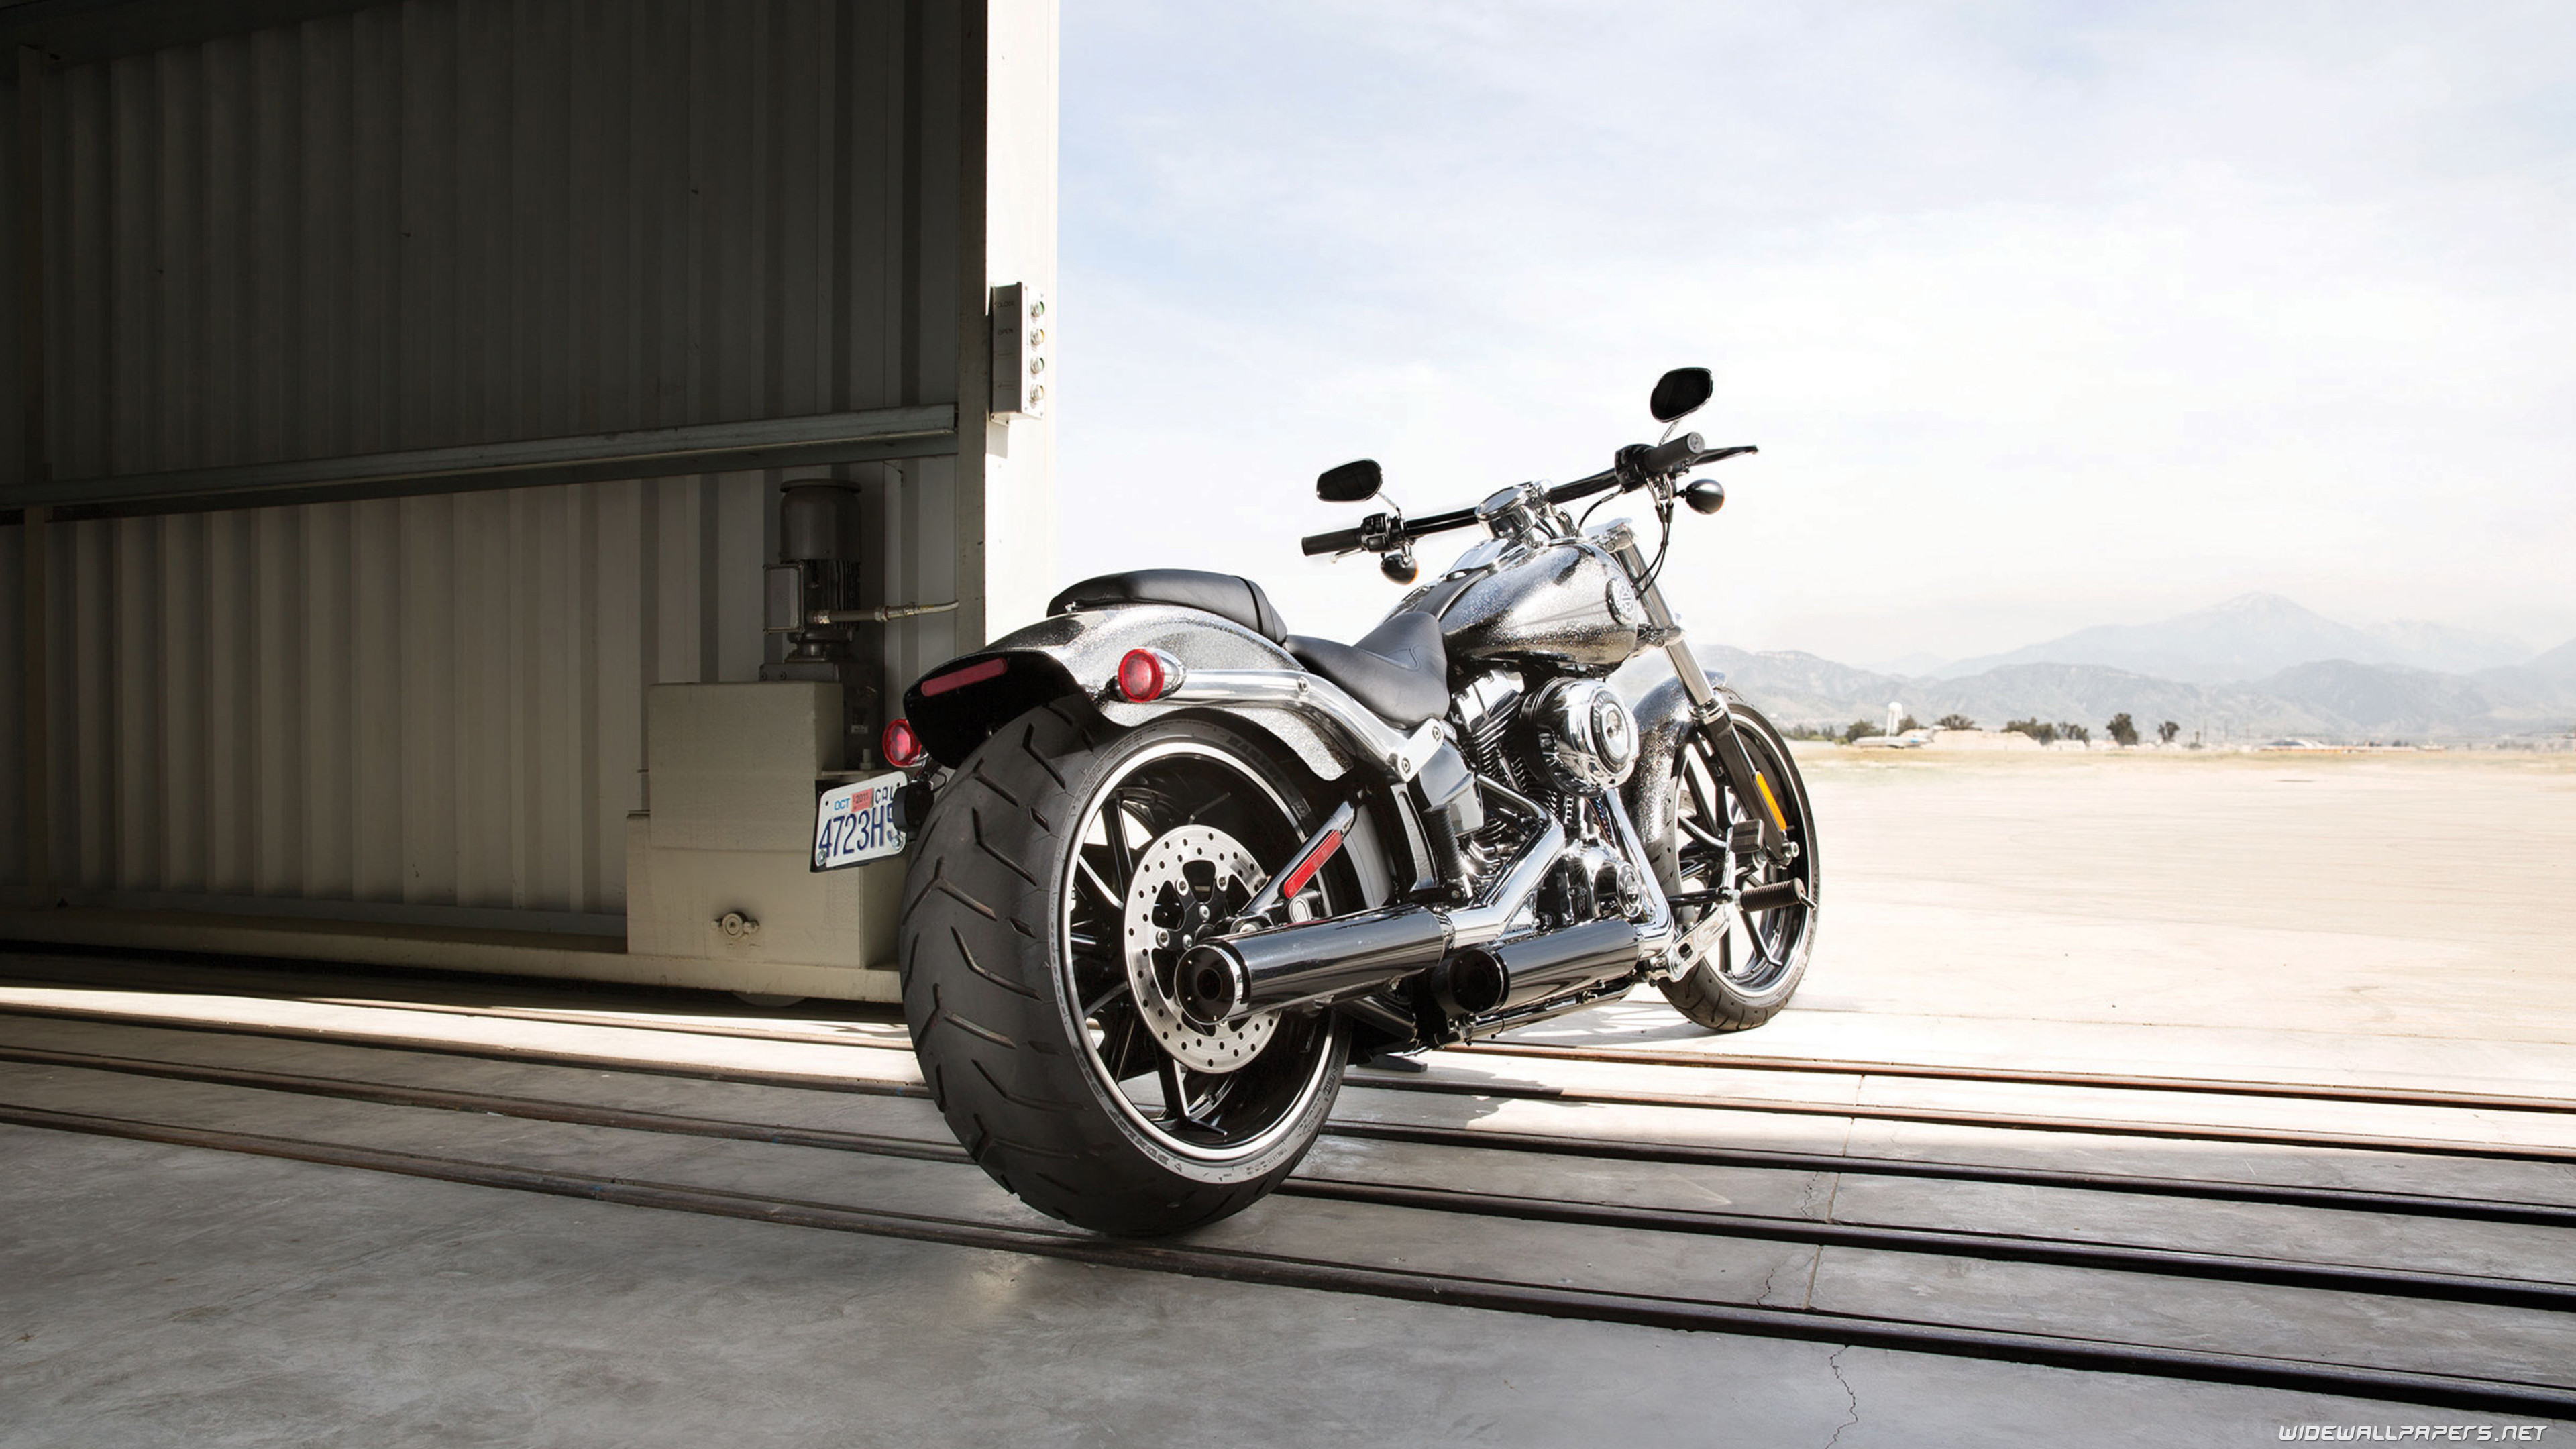 3840x2160 Harley-Davidson Softail Slim motorcycle wallpapers ...